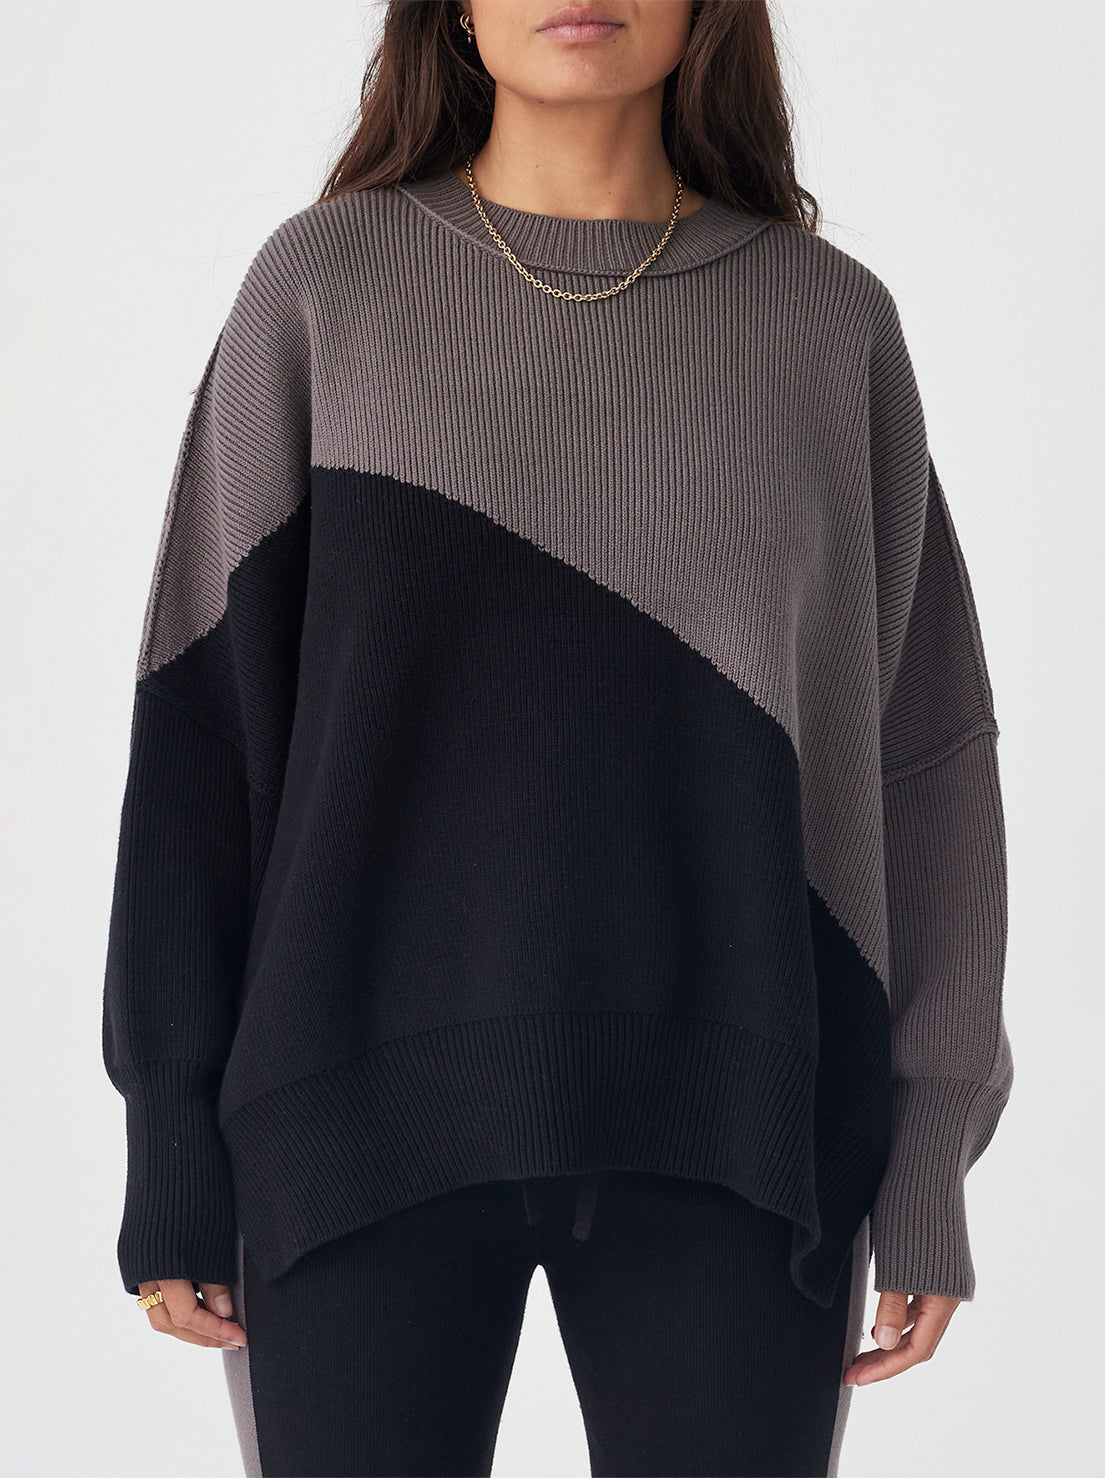 Arcaa Movement - Neo Sweater - Black & Grey